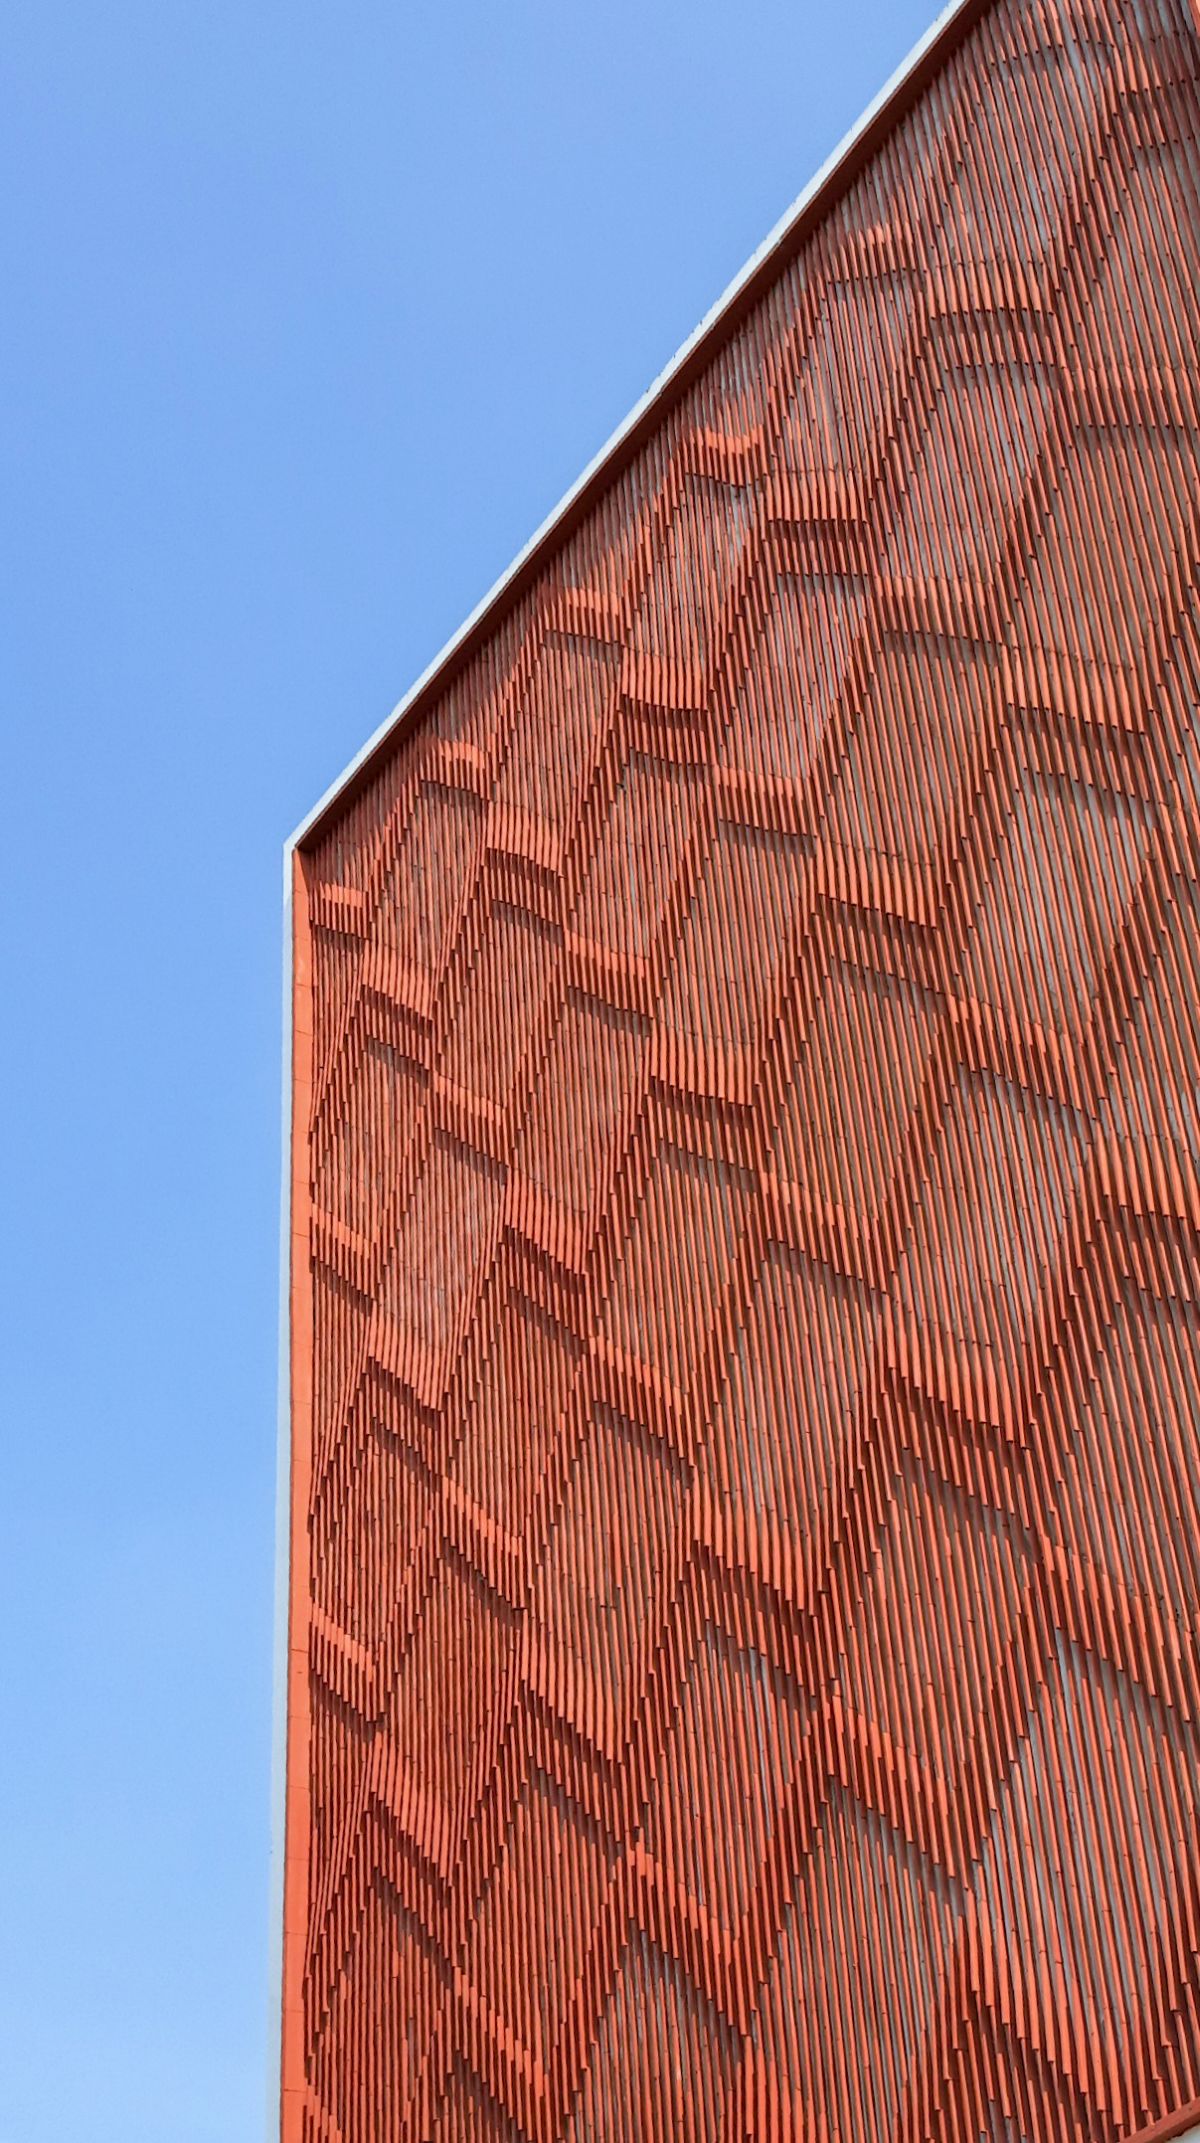 Clay roof tiles façade to minimize heat gain and has decorative function, at Vadodara, by Manoj Patel Design Studio 73